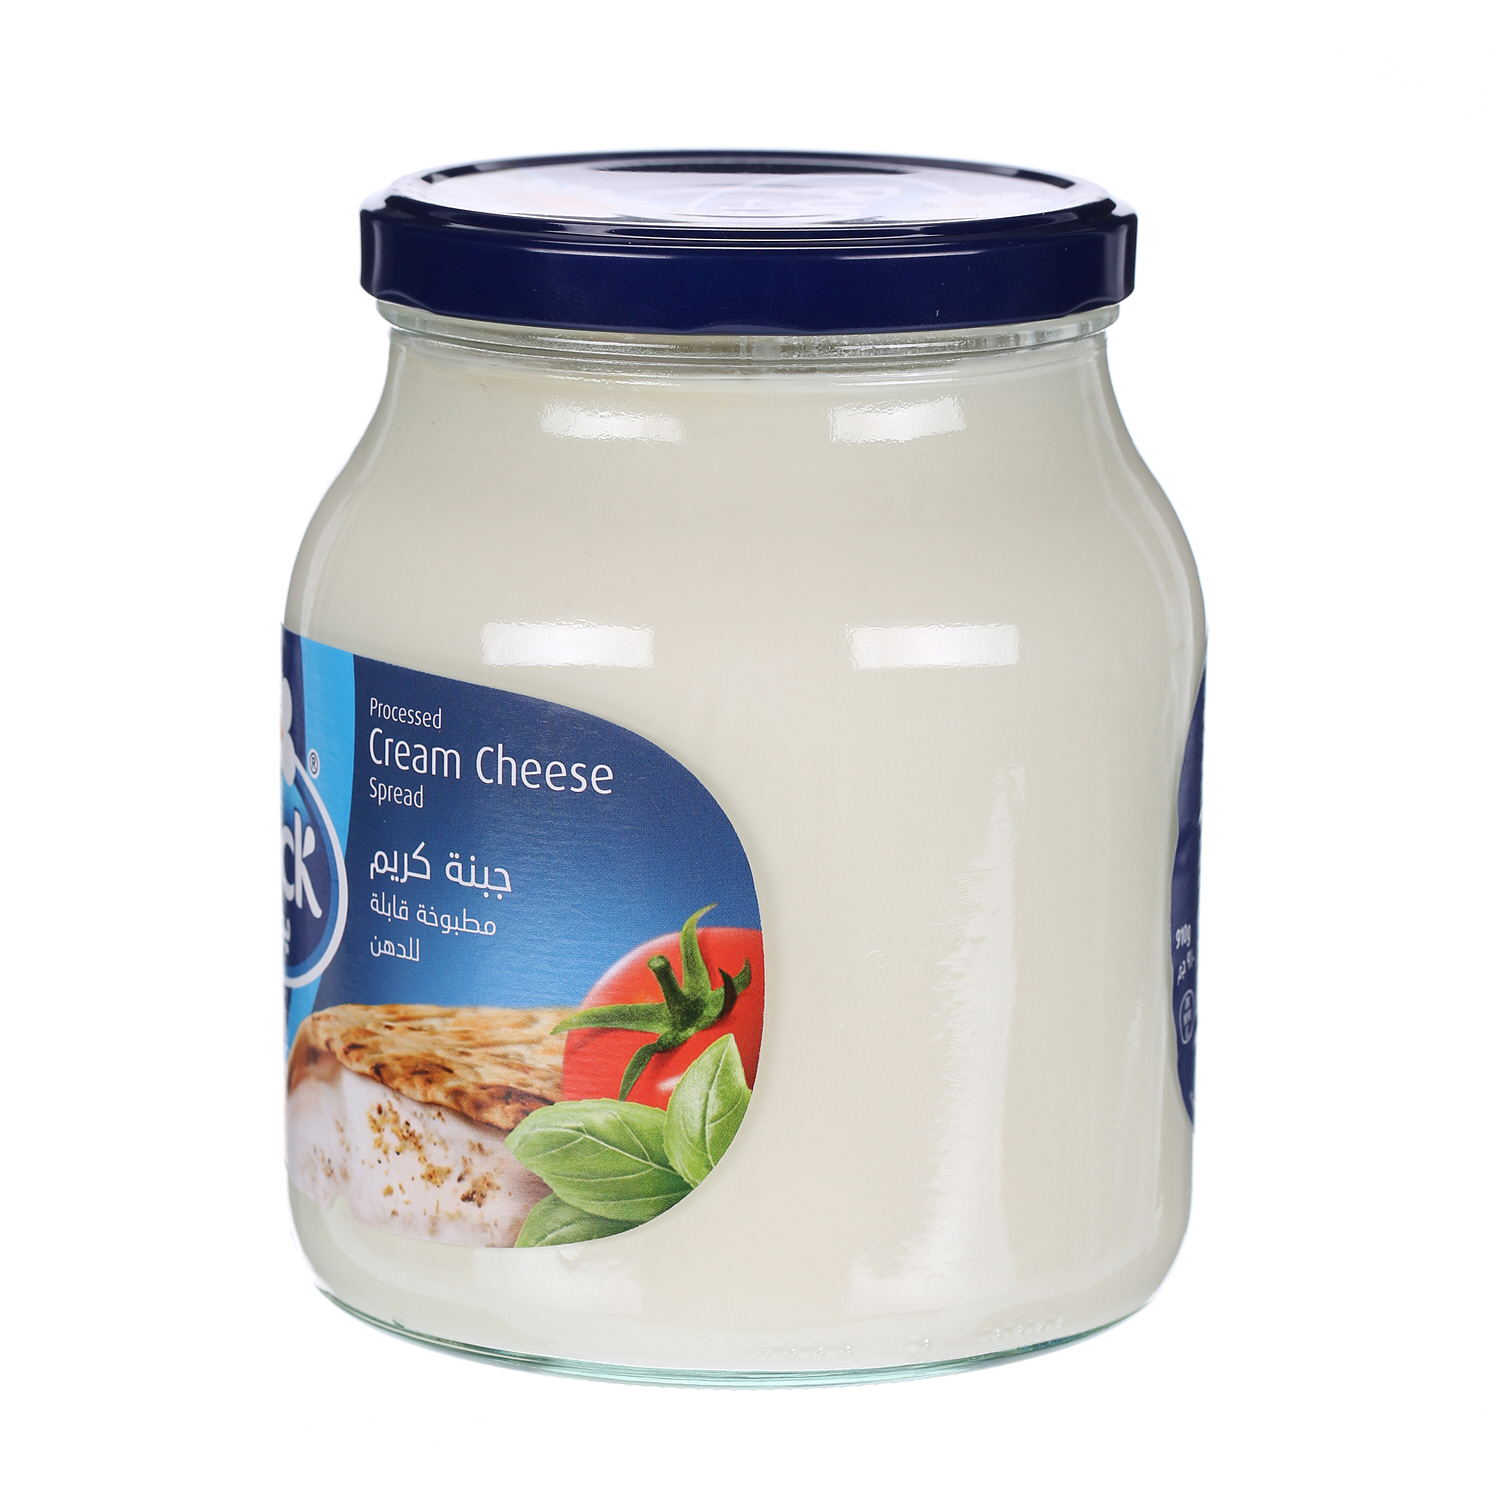 Puck Cheese Cream Jar 910 g